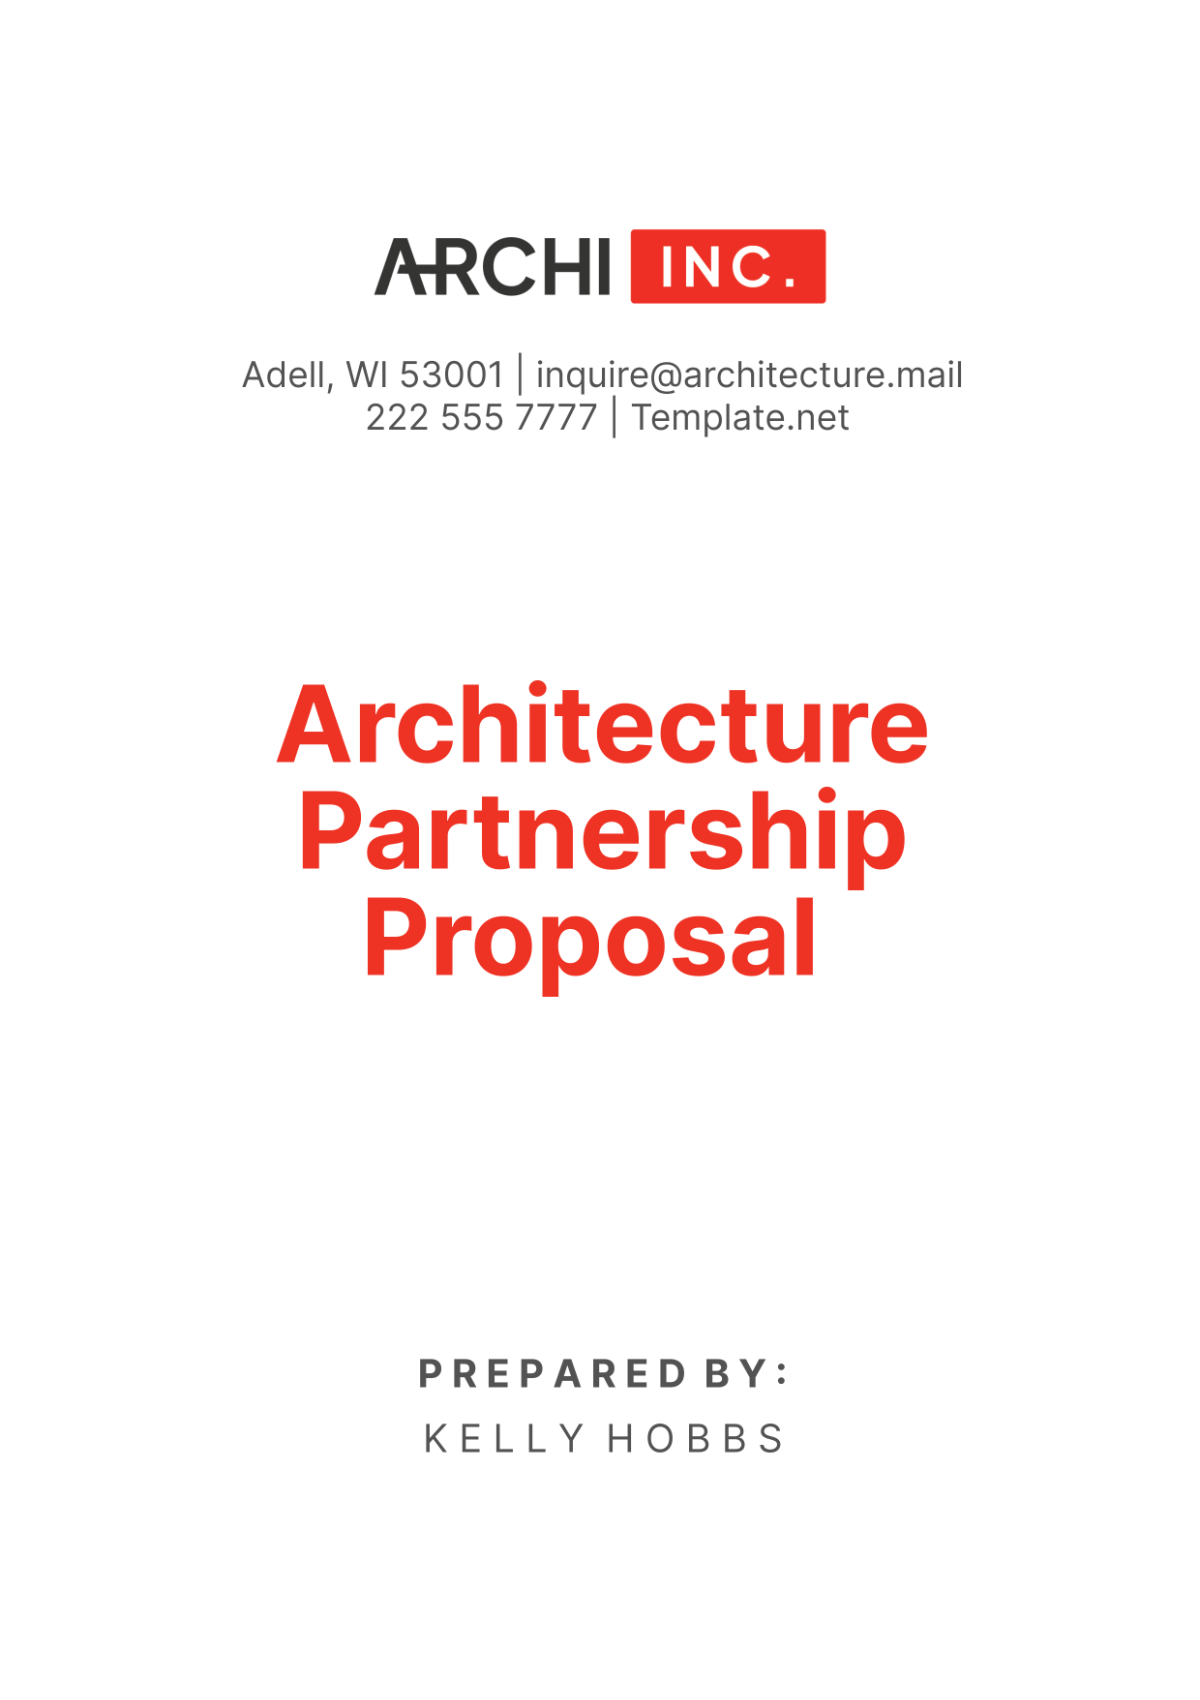 Free Architecture Partnership Proposal Template